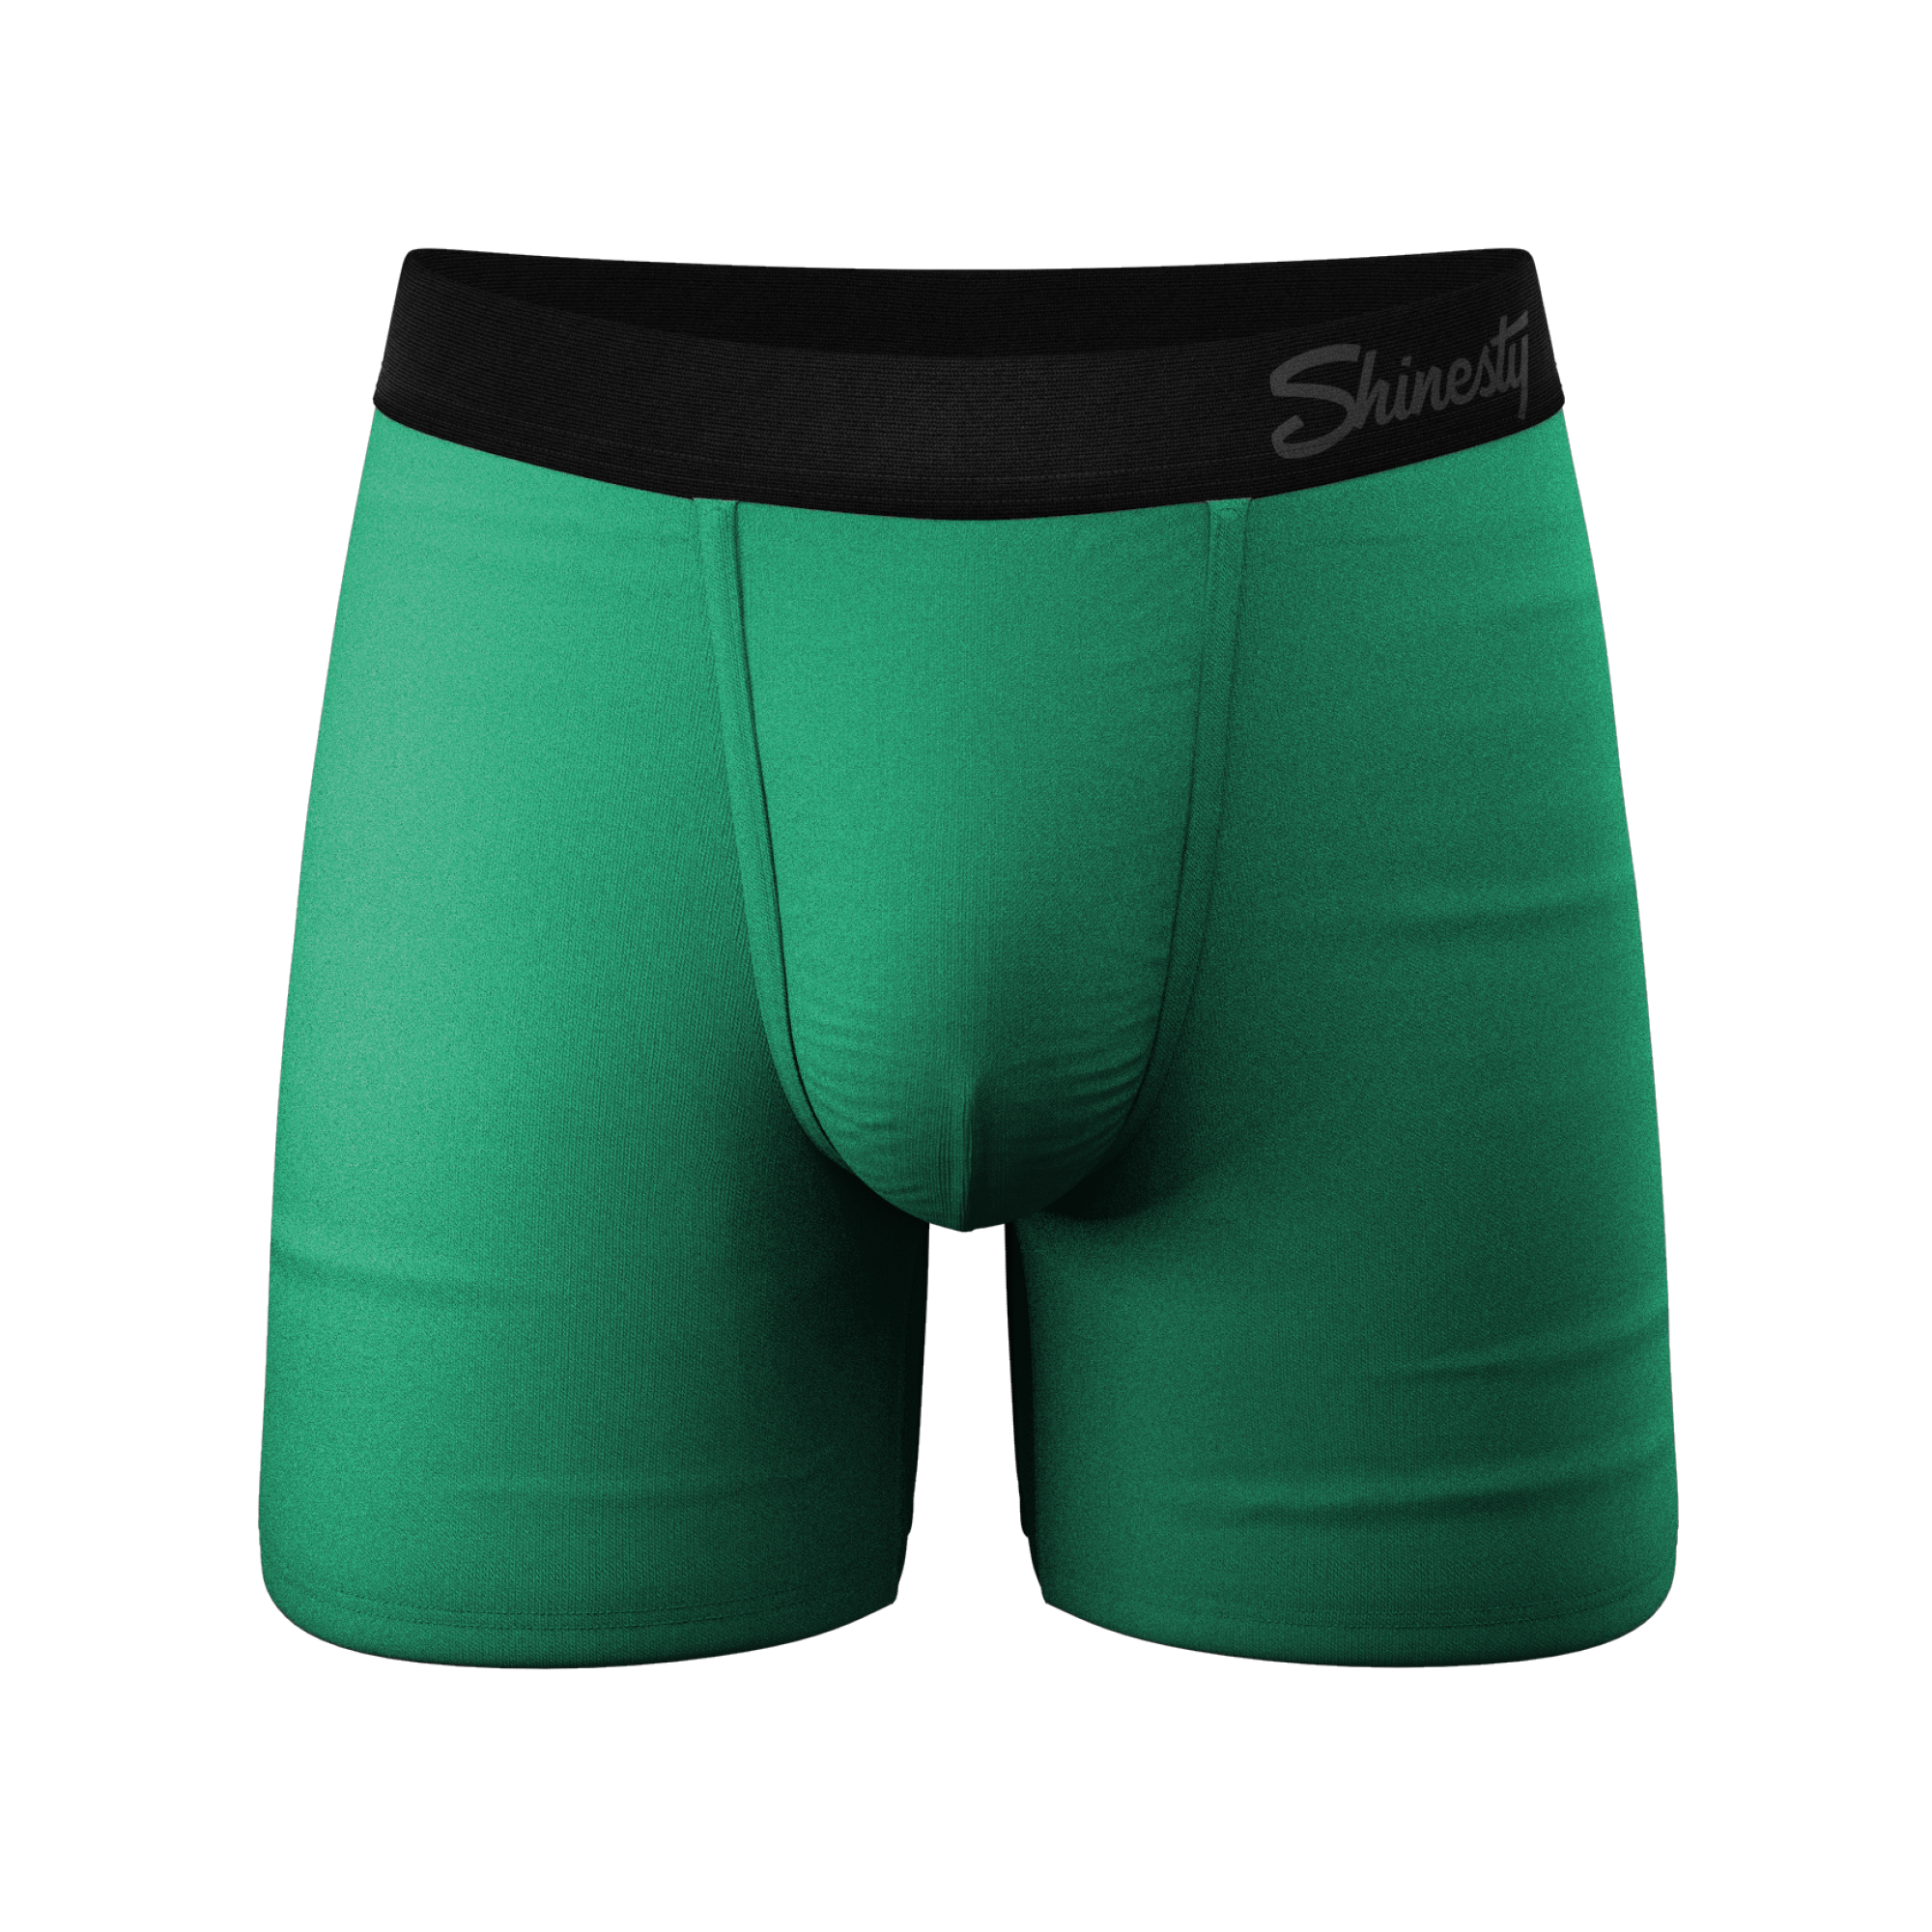 The Green Boys | Men's Green Ball Hammock® Pouch Underwear